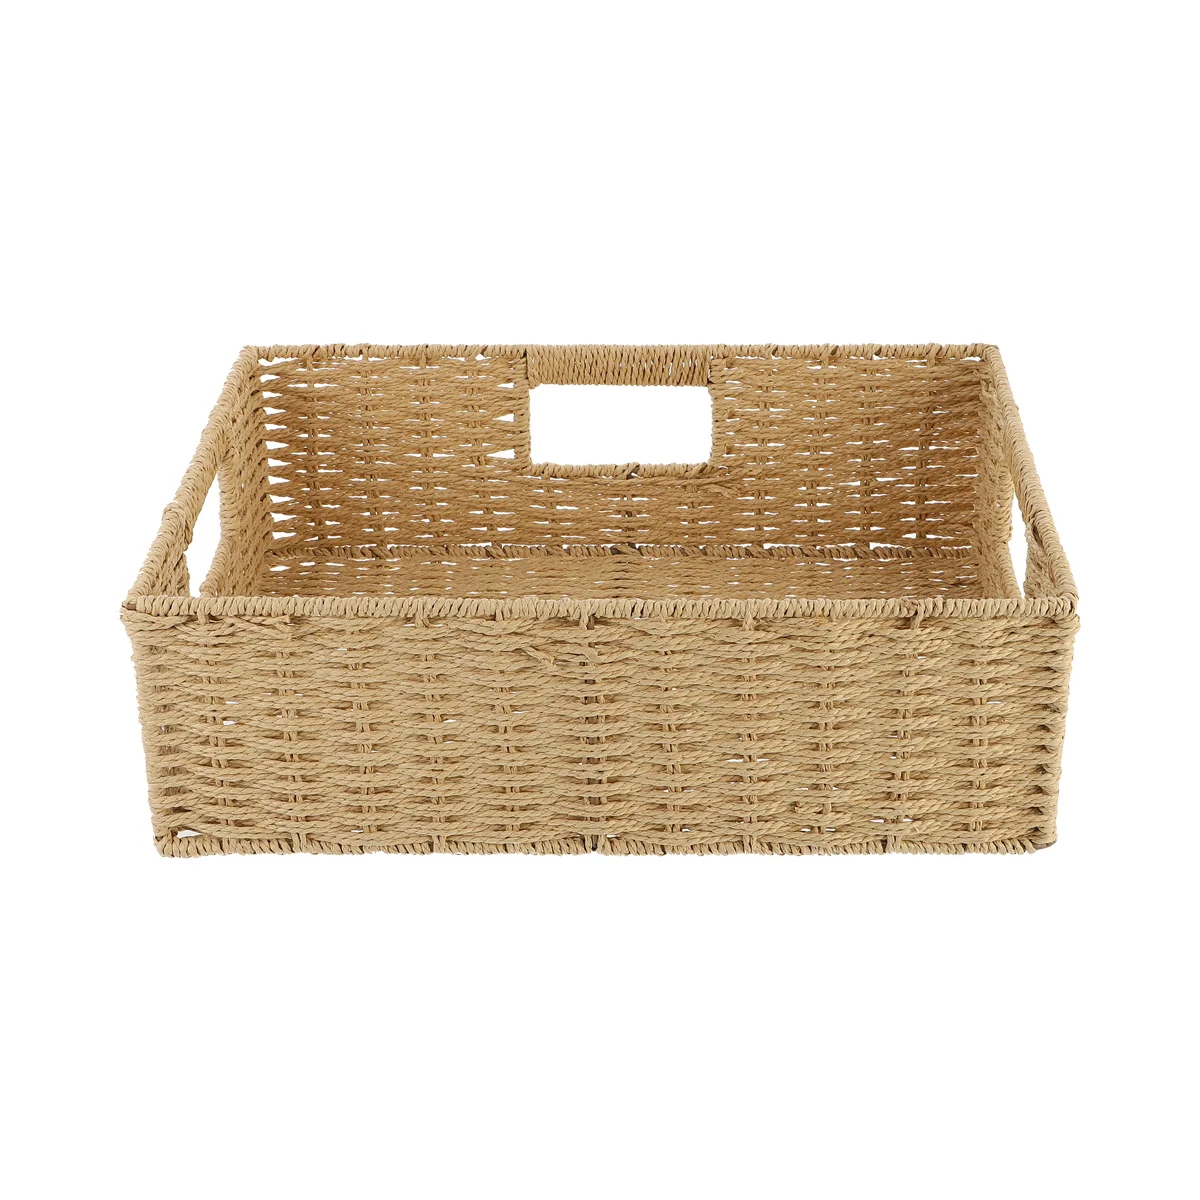 

Storage Basket Wicker Baskets Rattan Woven Sundriesdesktop Bathroom Weaving Bins Bucket Hyacinth Laundry Clothes Cloth Closet